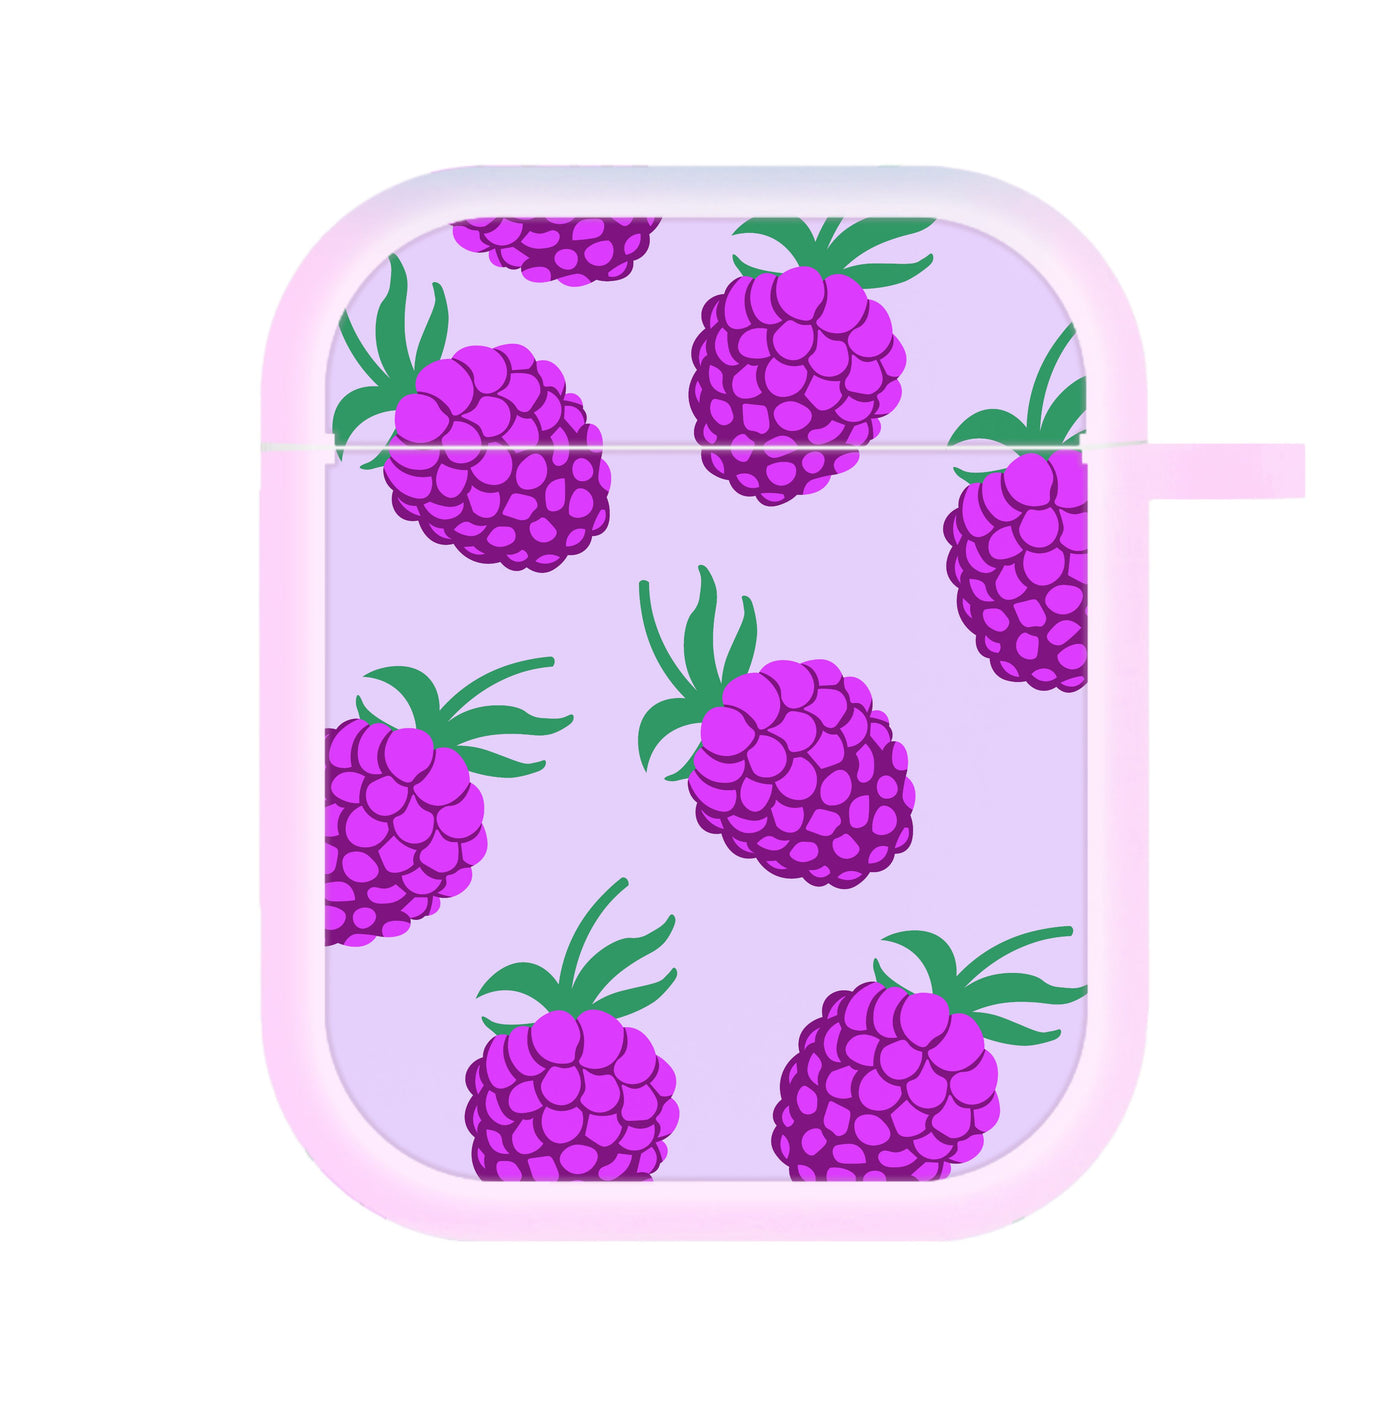 Rasberries - Fruit Patterns AirPods Case